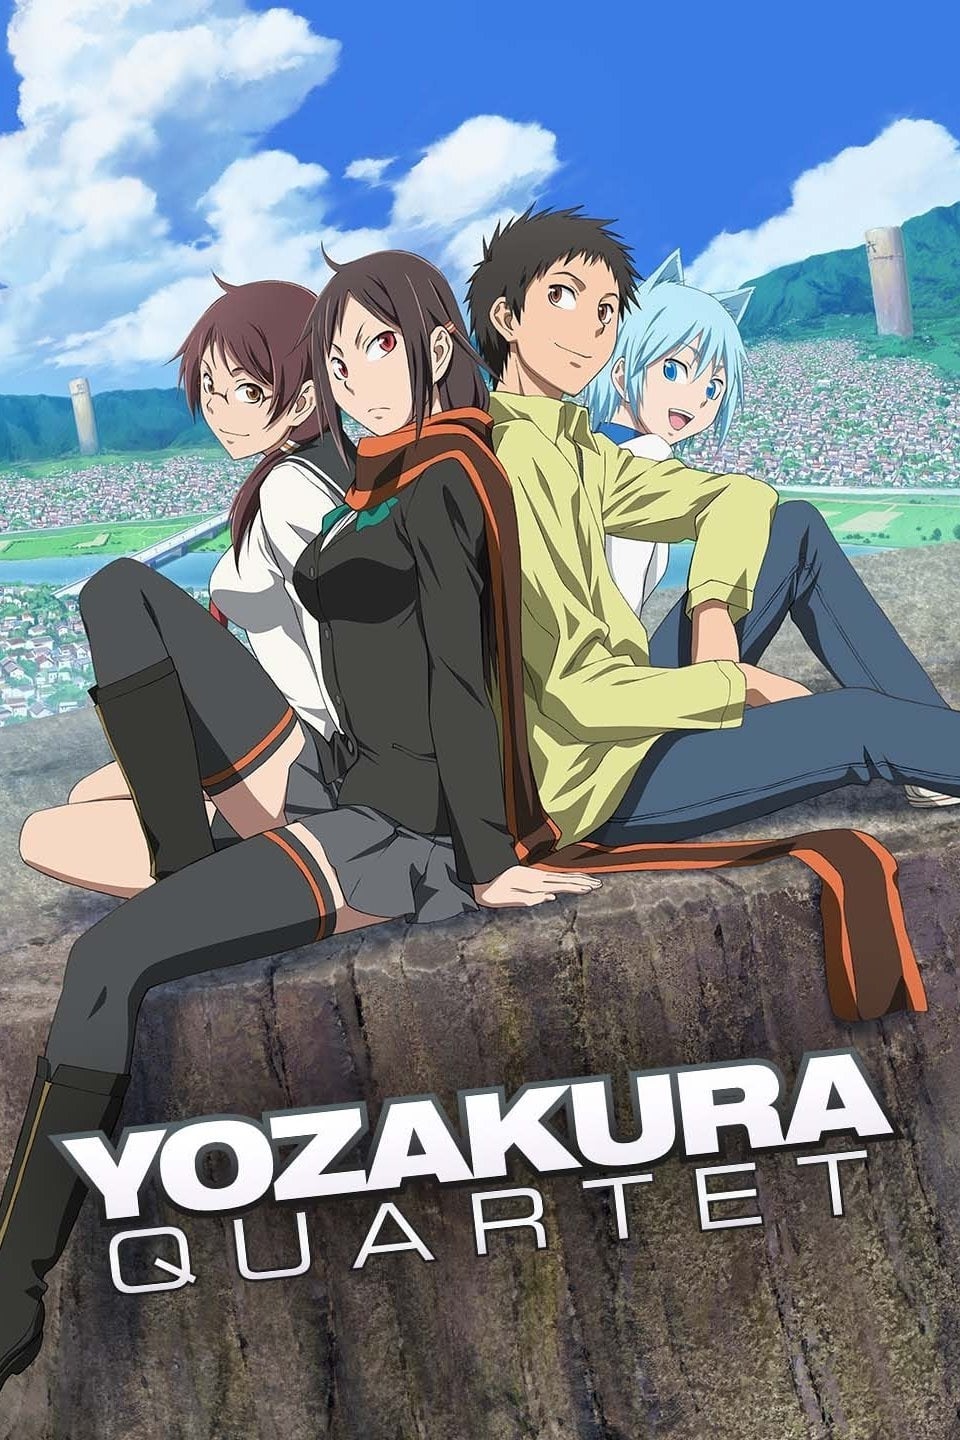 Yozakura Quartet (2008)